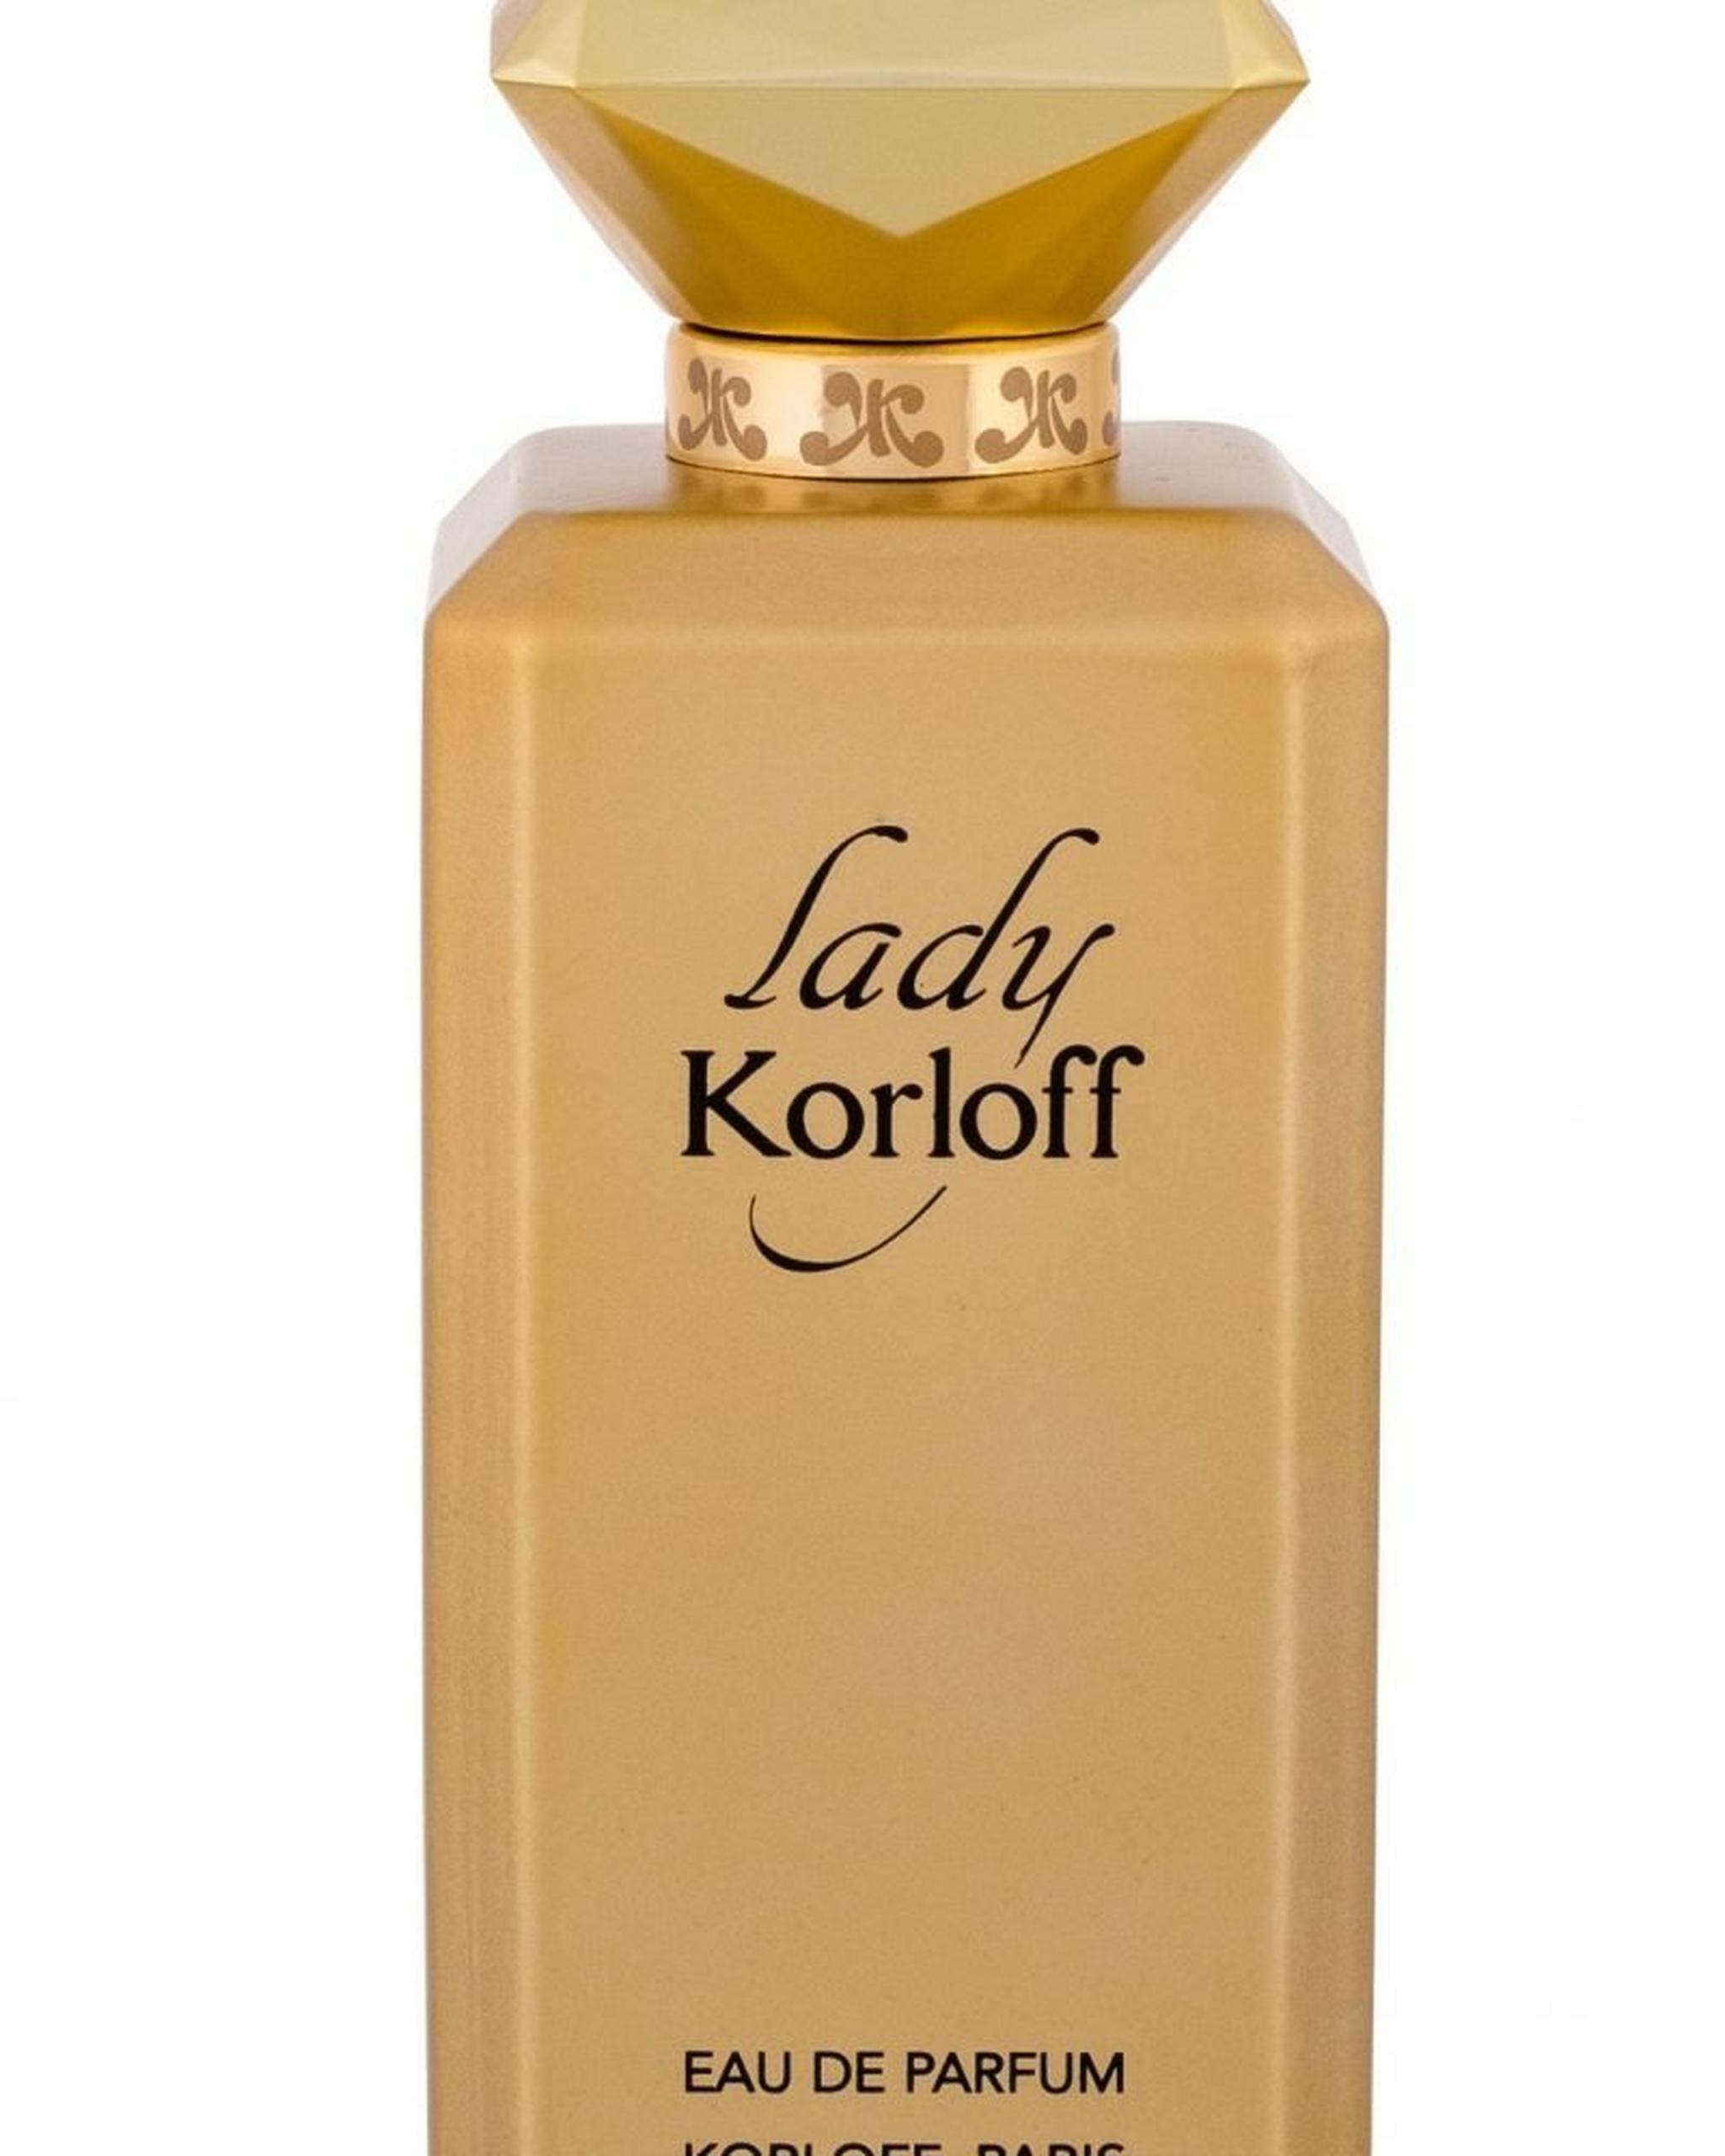 Lady Korloff by Korloff for Women 88 mL Eau de Parfum